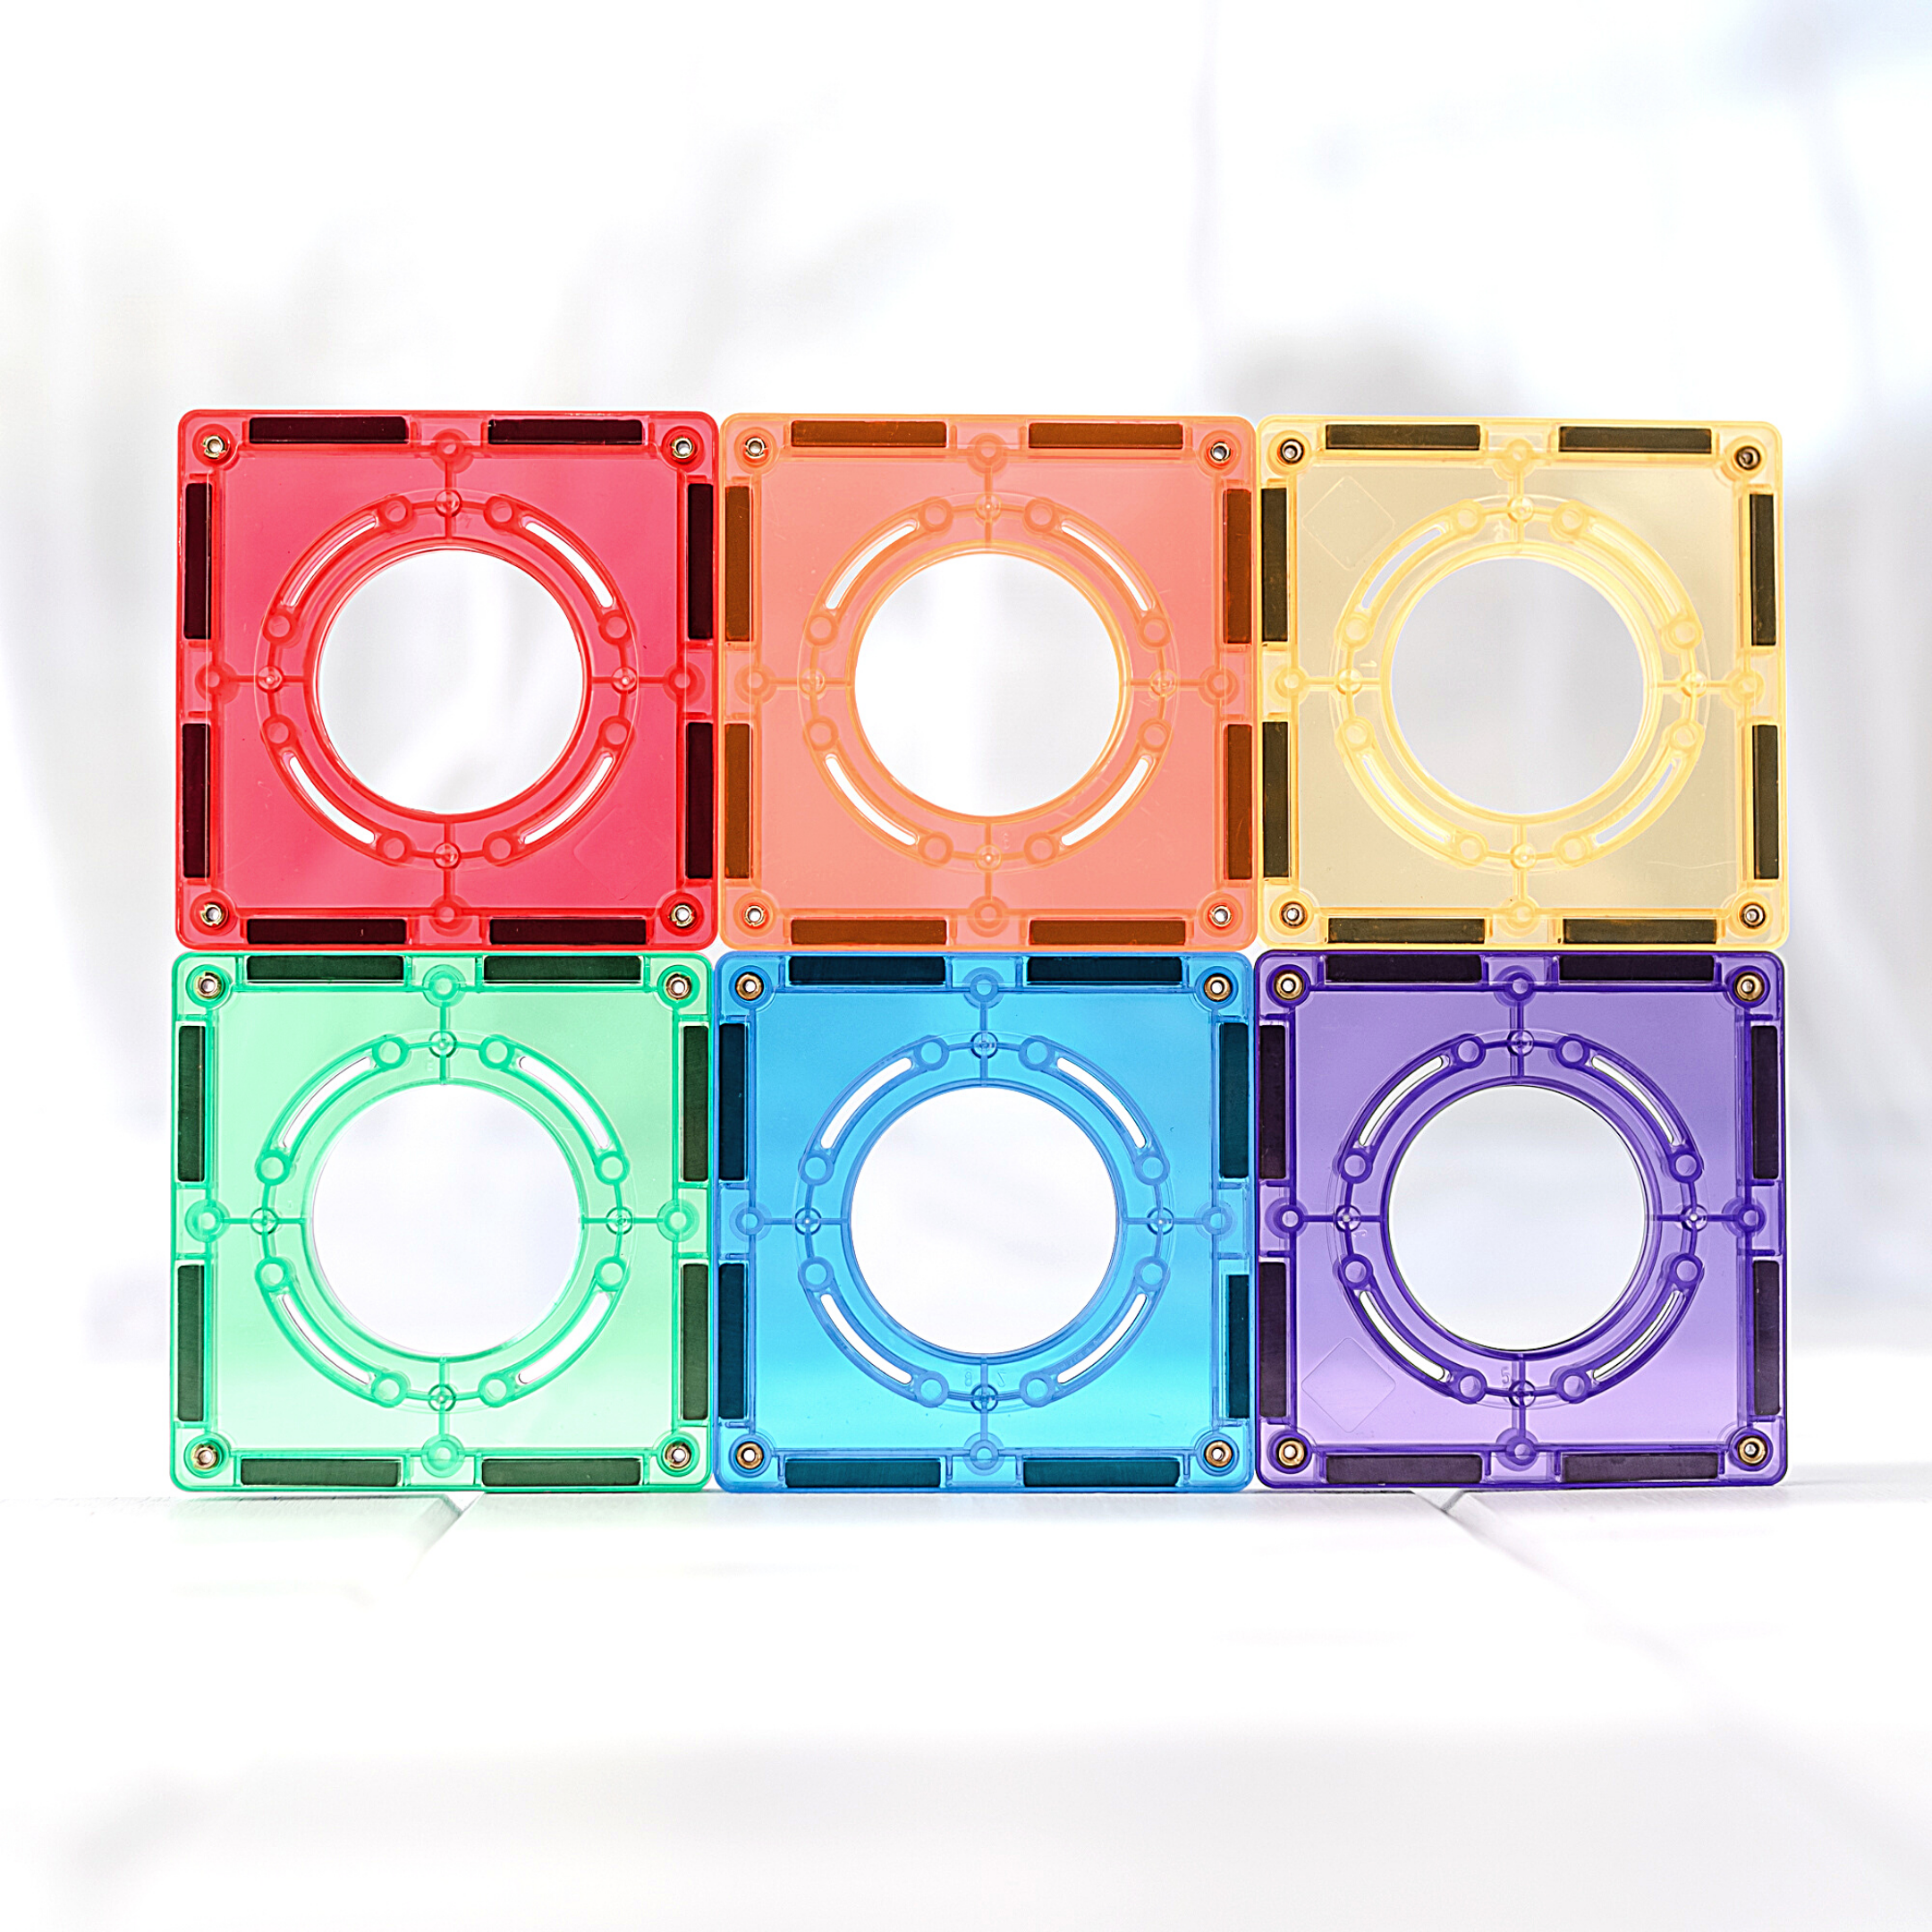 CONNETIX Super Ball Run Magnetic Tile Pack for Kids, 134 pc.